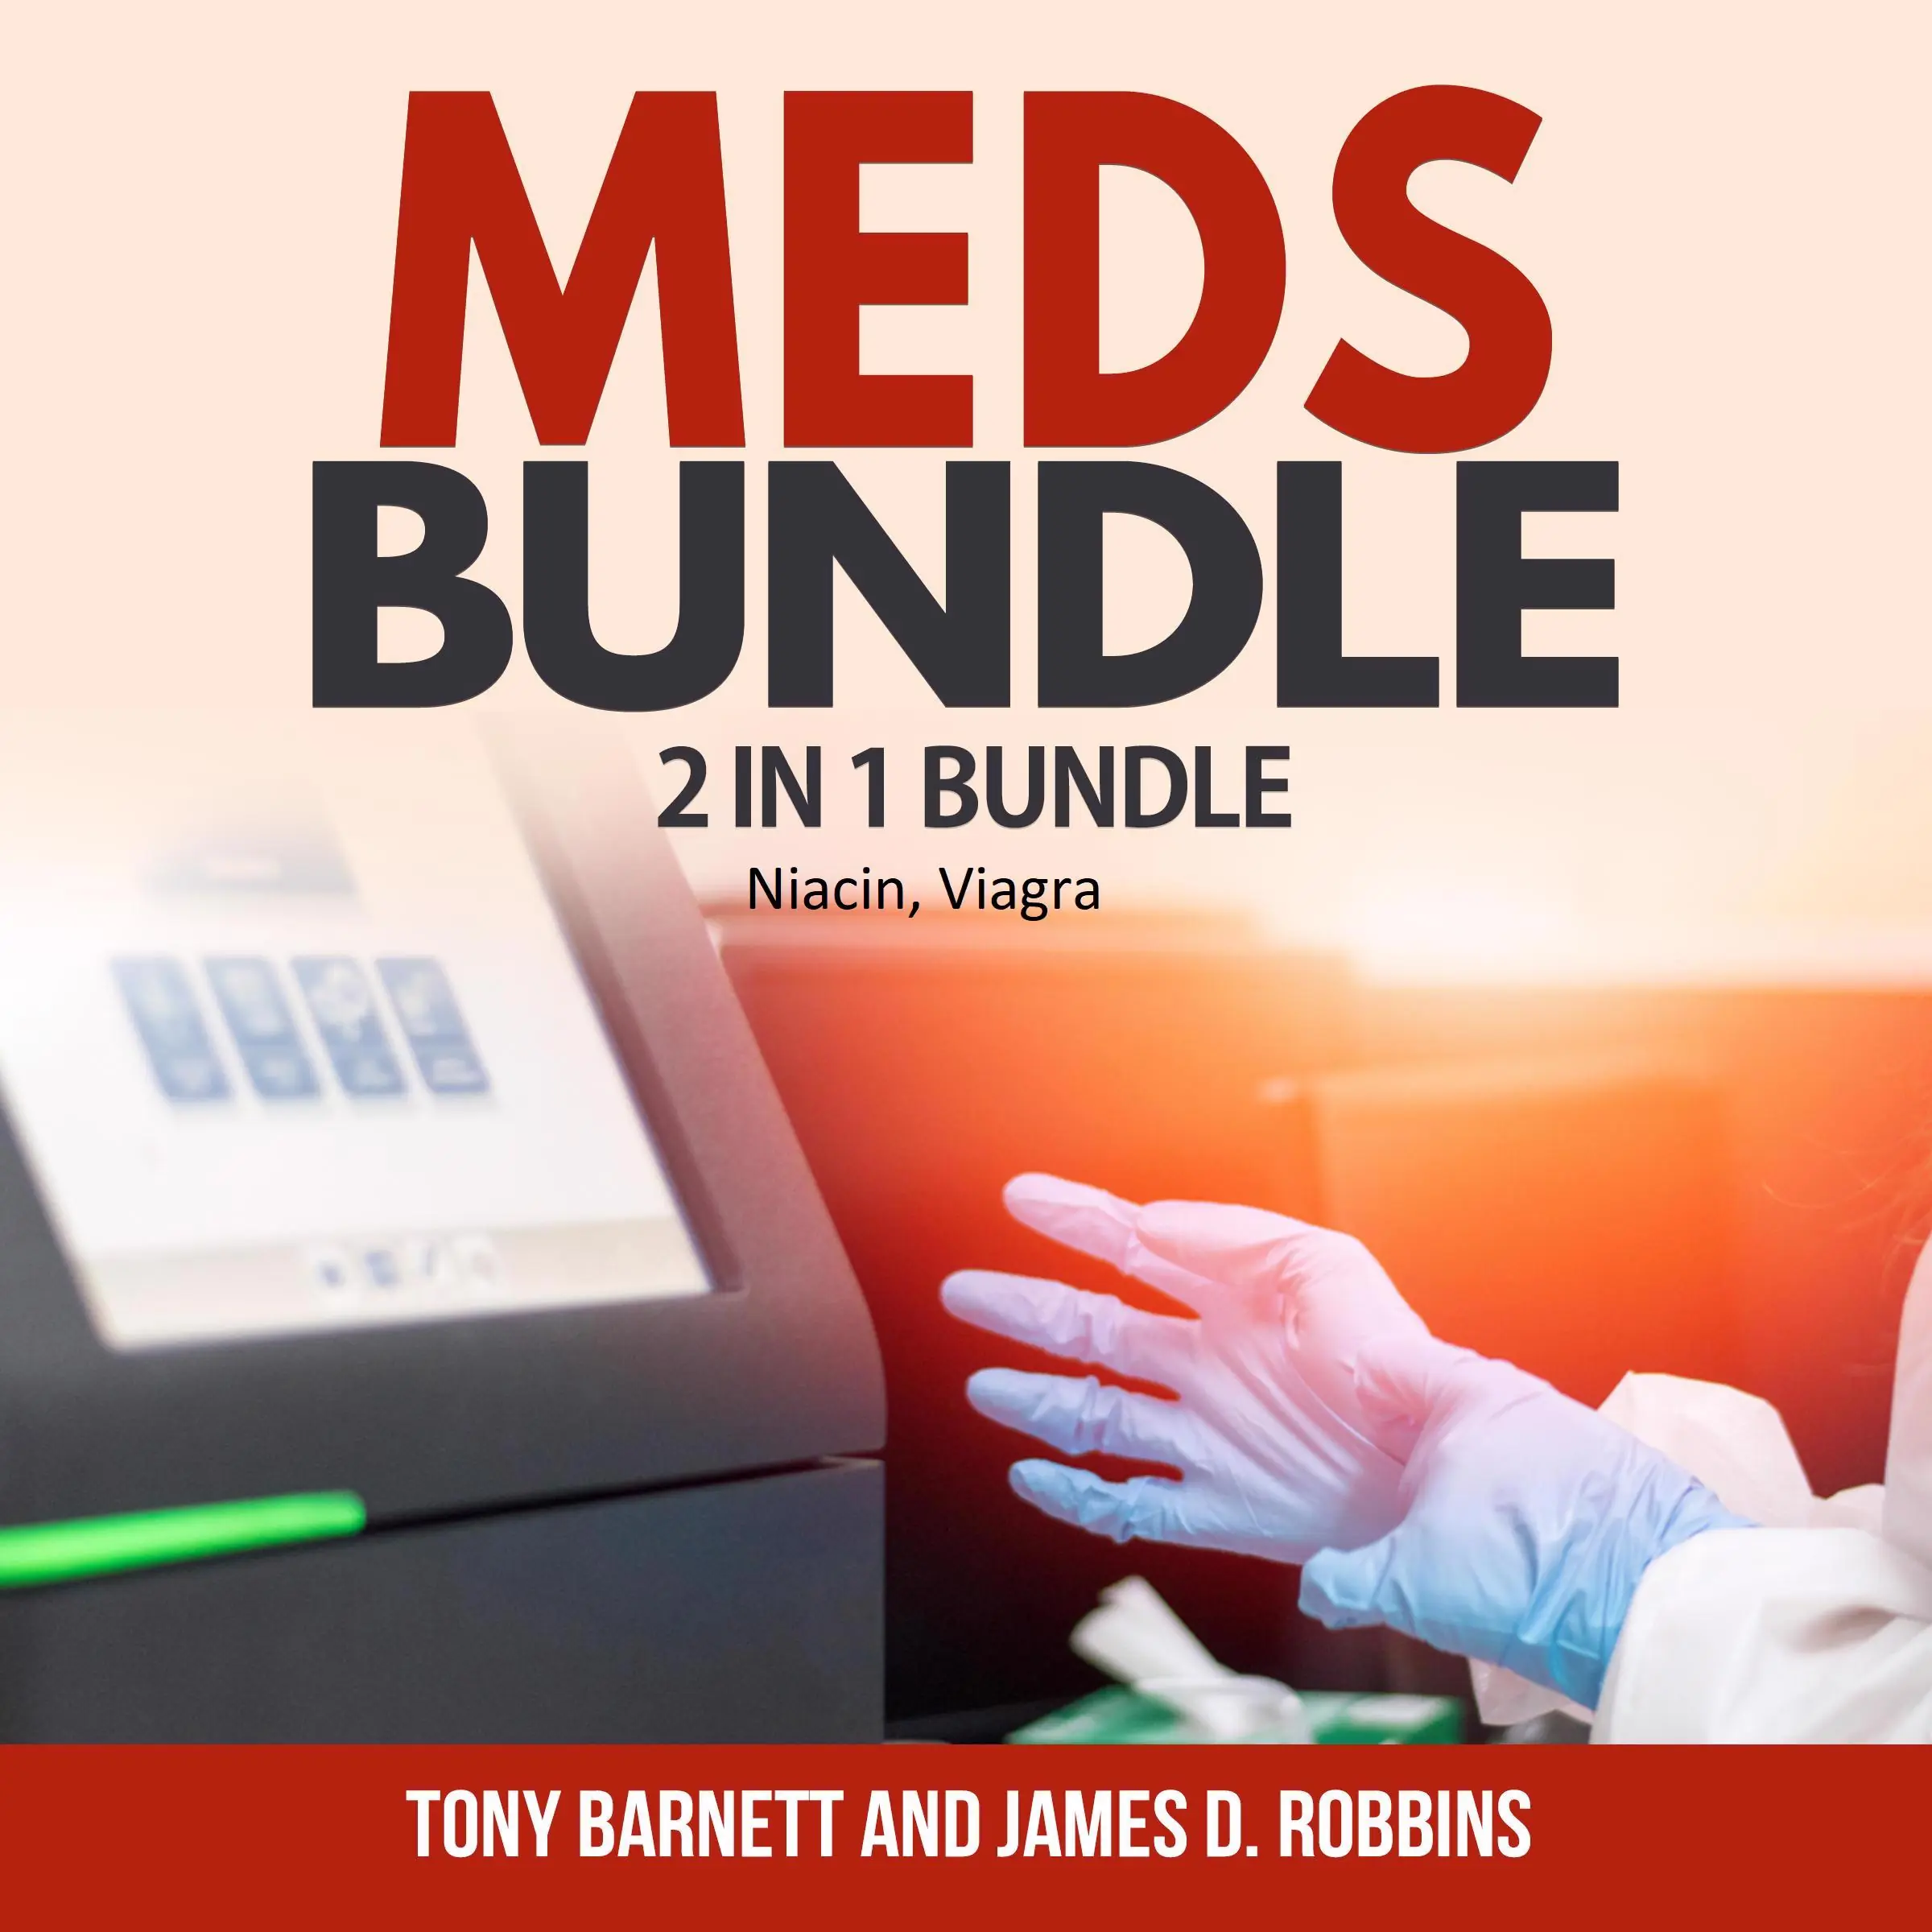 Meds Bundle: 2 in 1 Bundle, Niacin, Viagra Audiobook by Tony Barnett and James D. Robbins